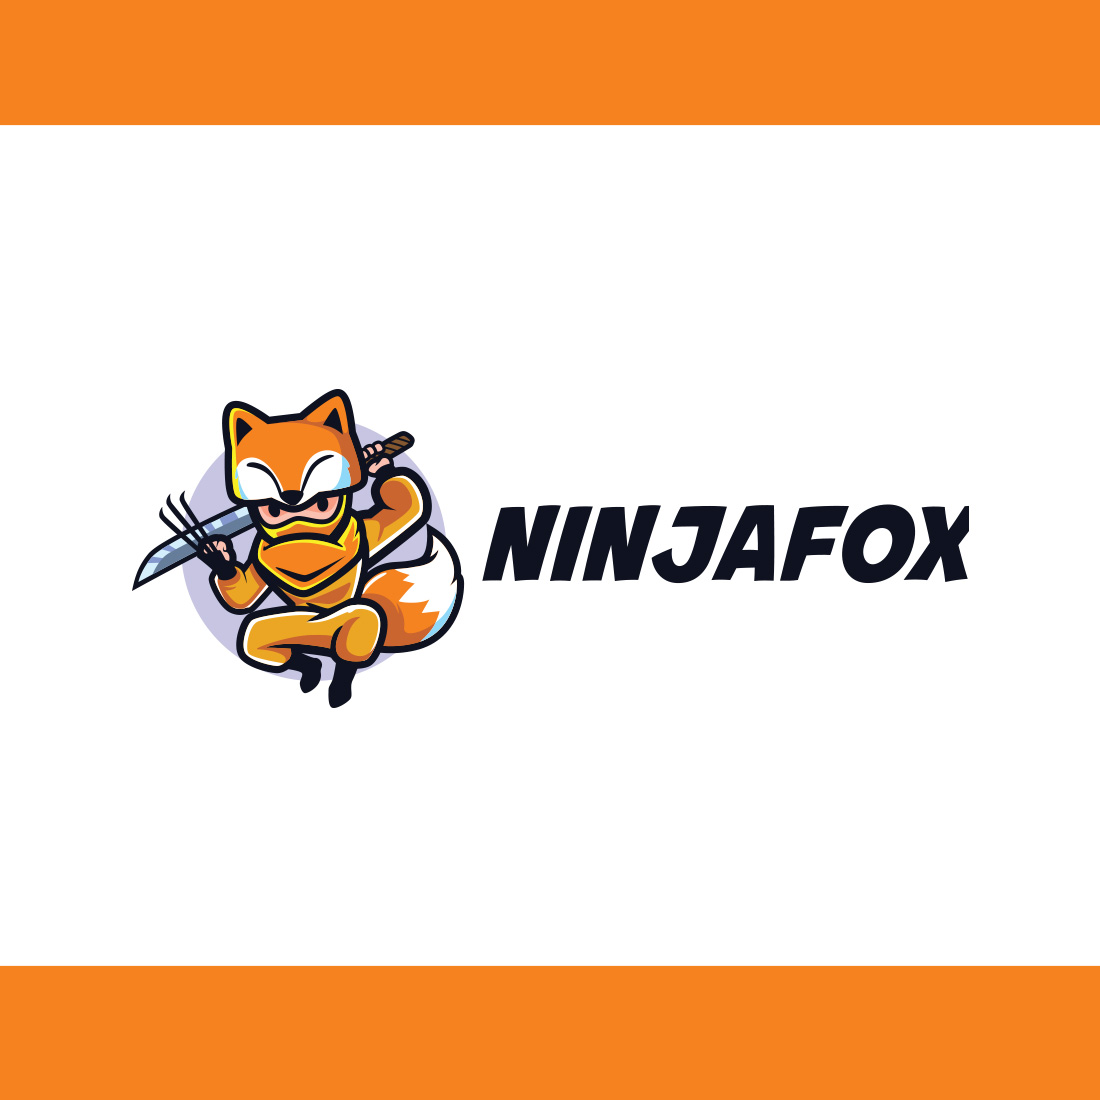 Foxy Ninja Character Mascot Logo cover image.